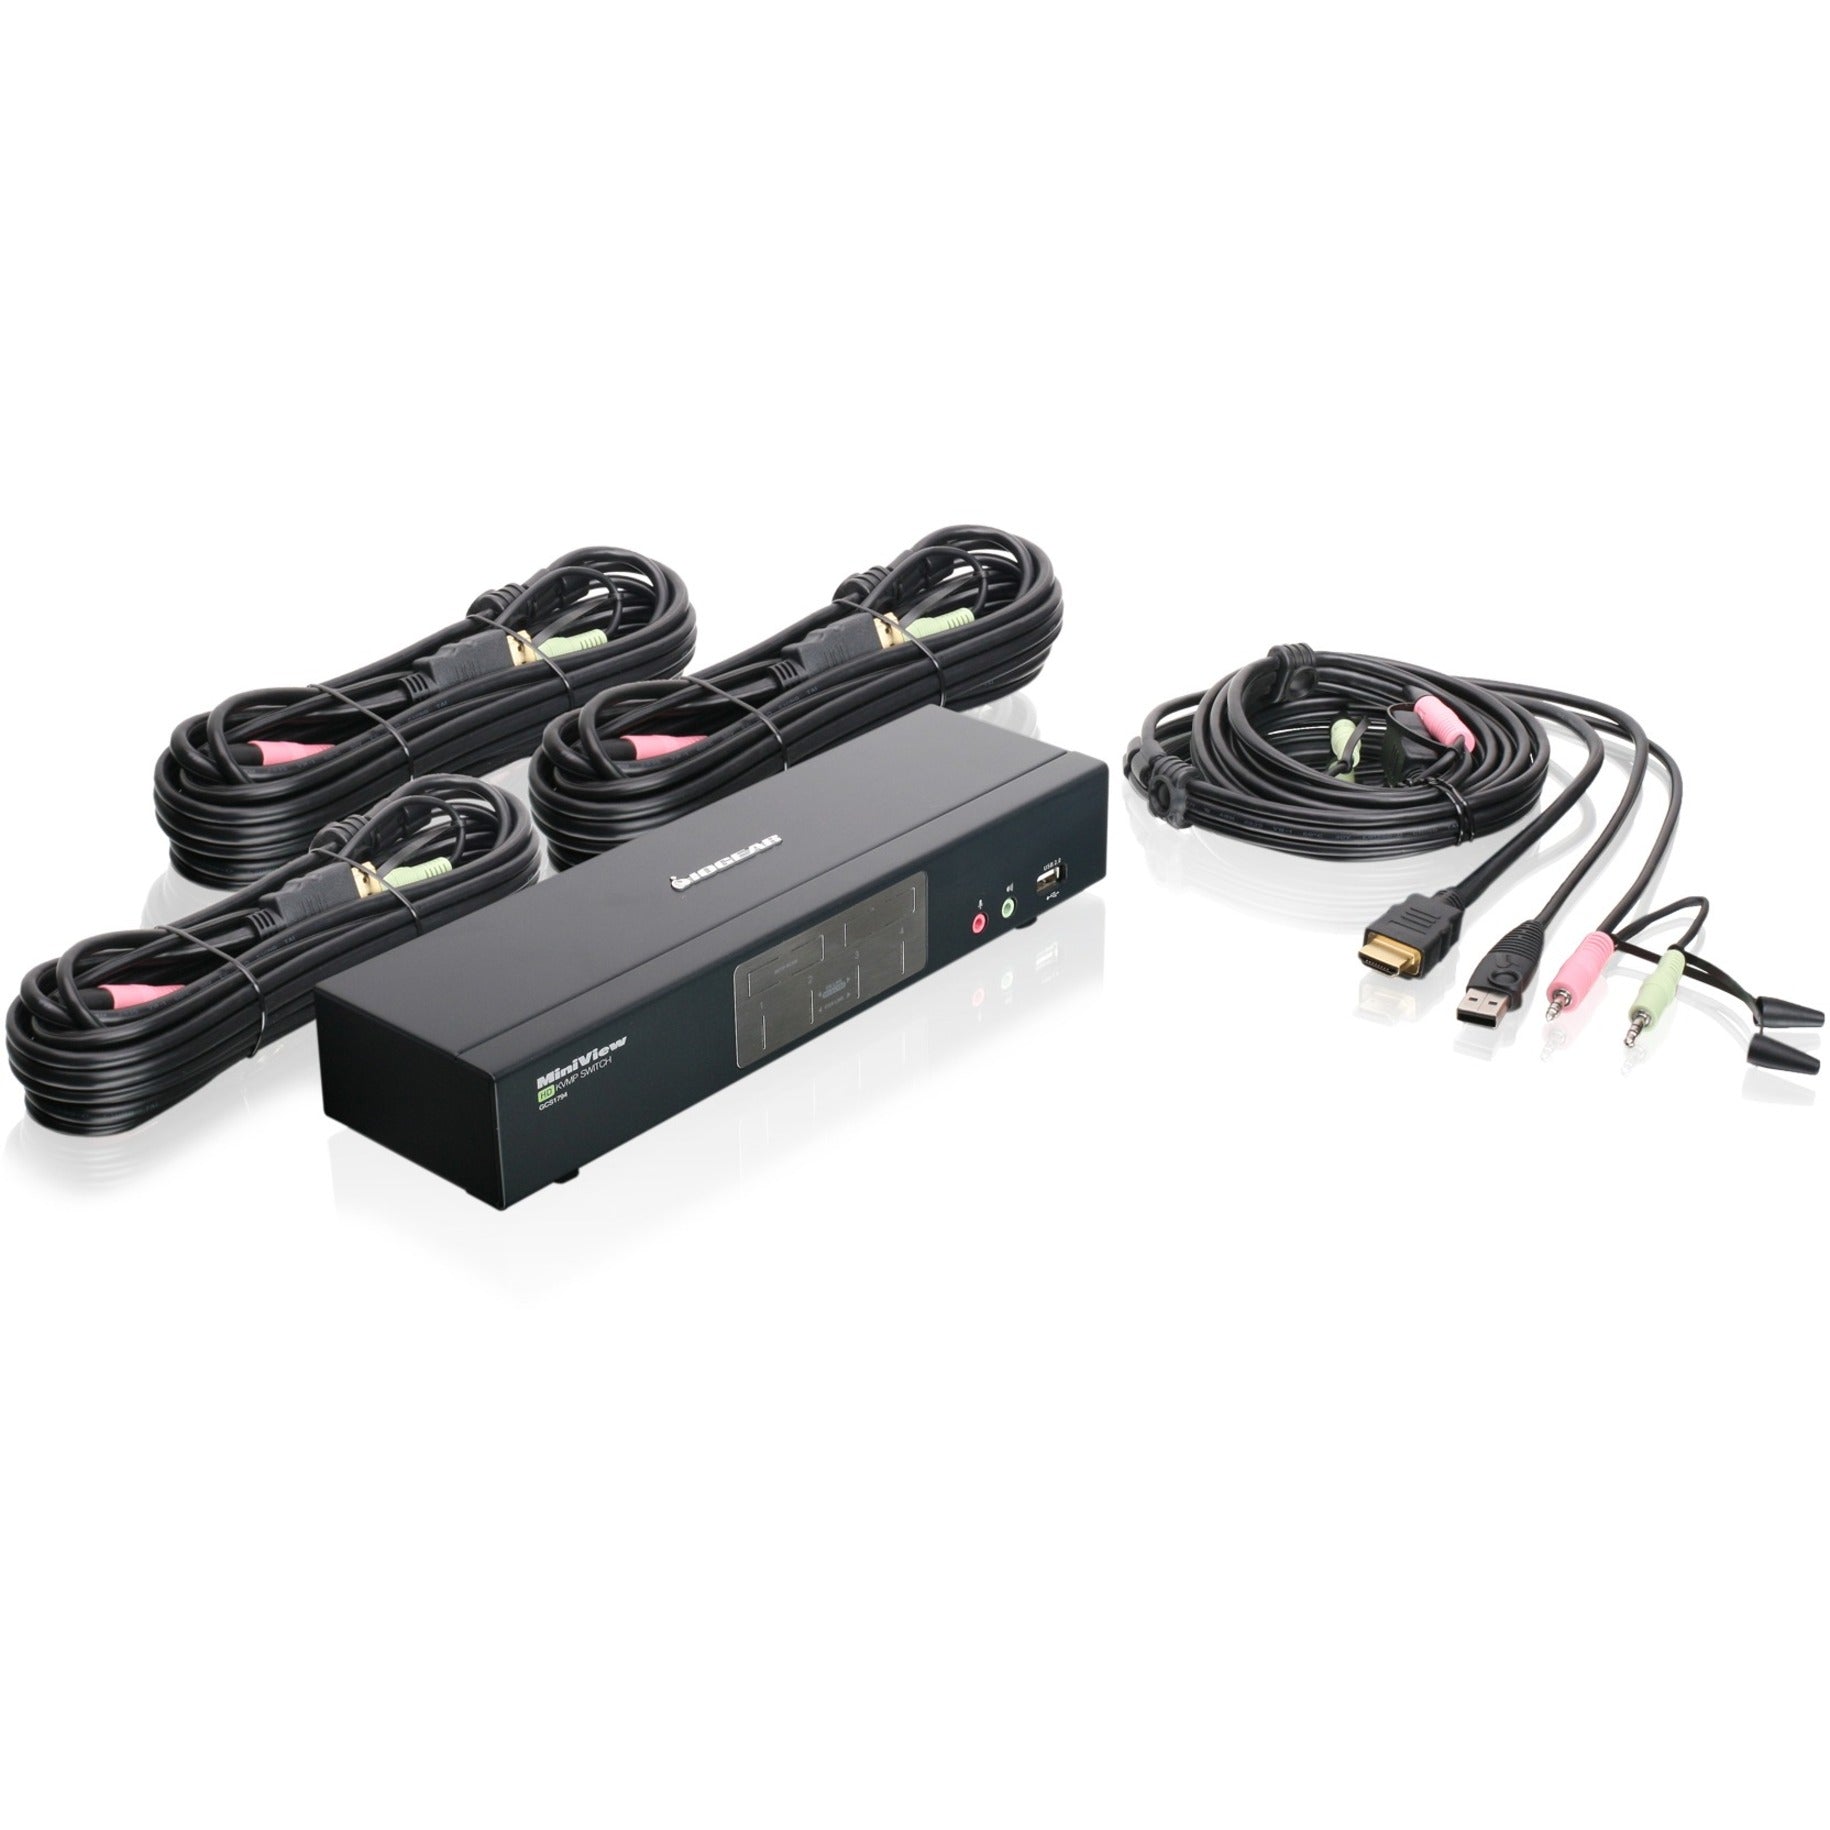 IOGEAR GCS1794 MiniView 4-Port HDMI Multimedia KVM Switch with Audio, 3840 x 2160 Resolution, 3 Year Warranty